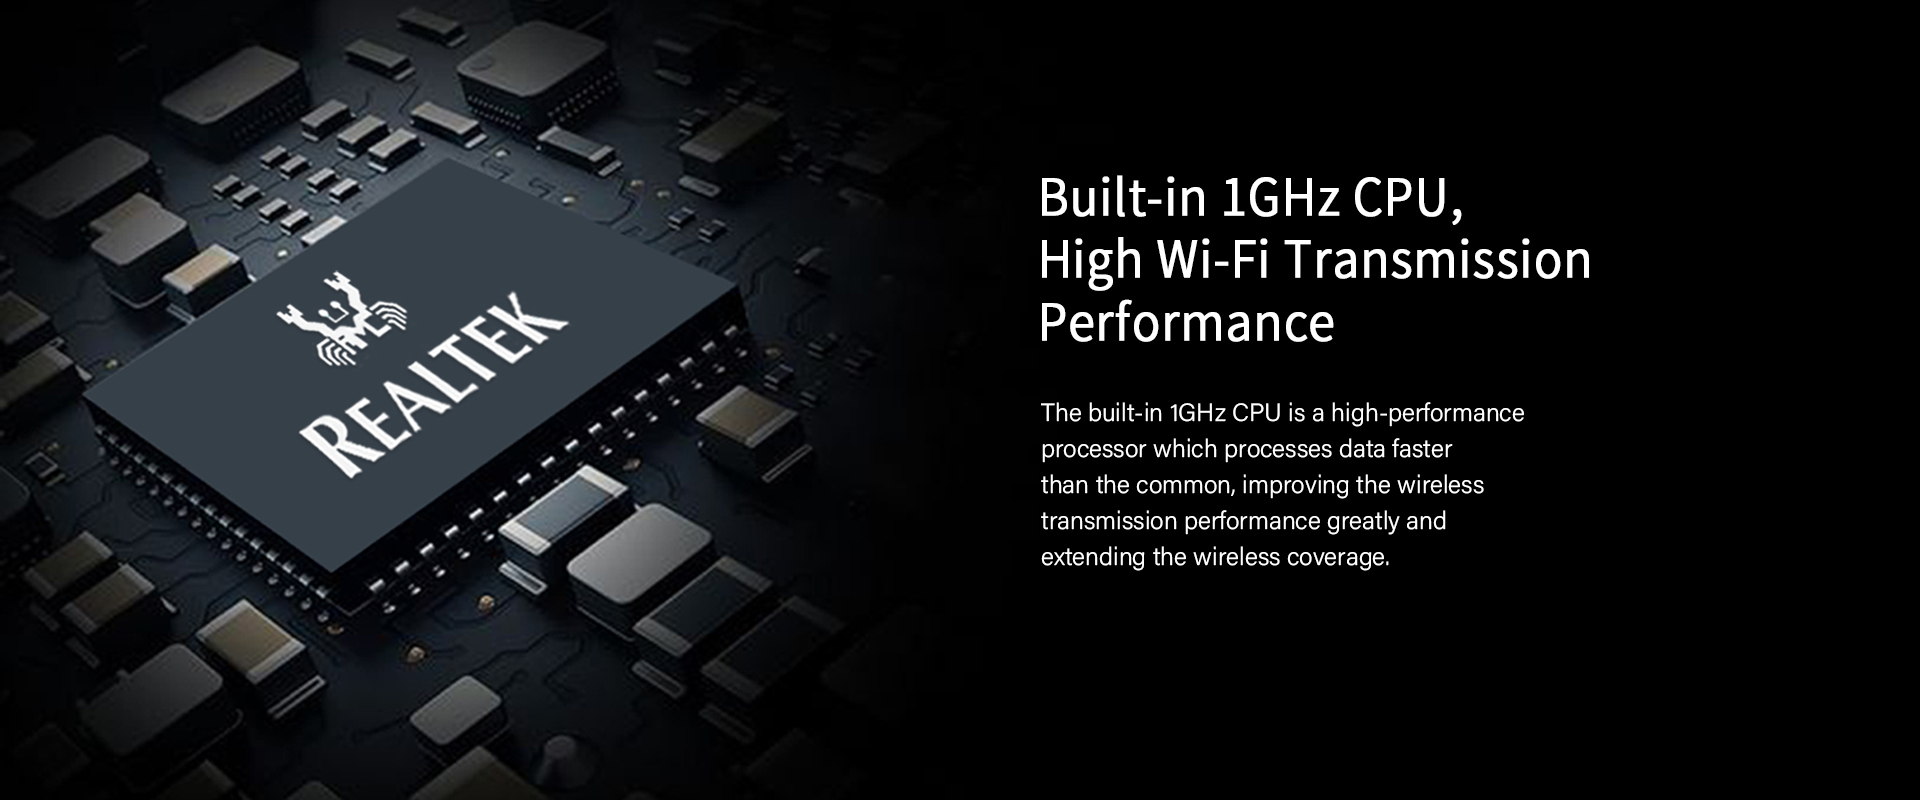 high wi-fi transmission performance